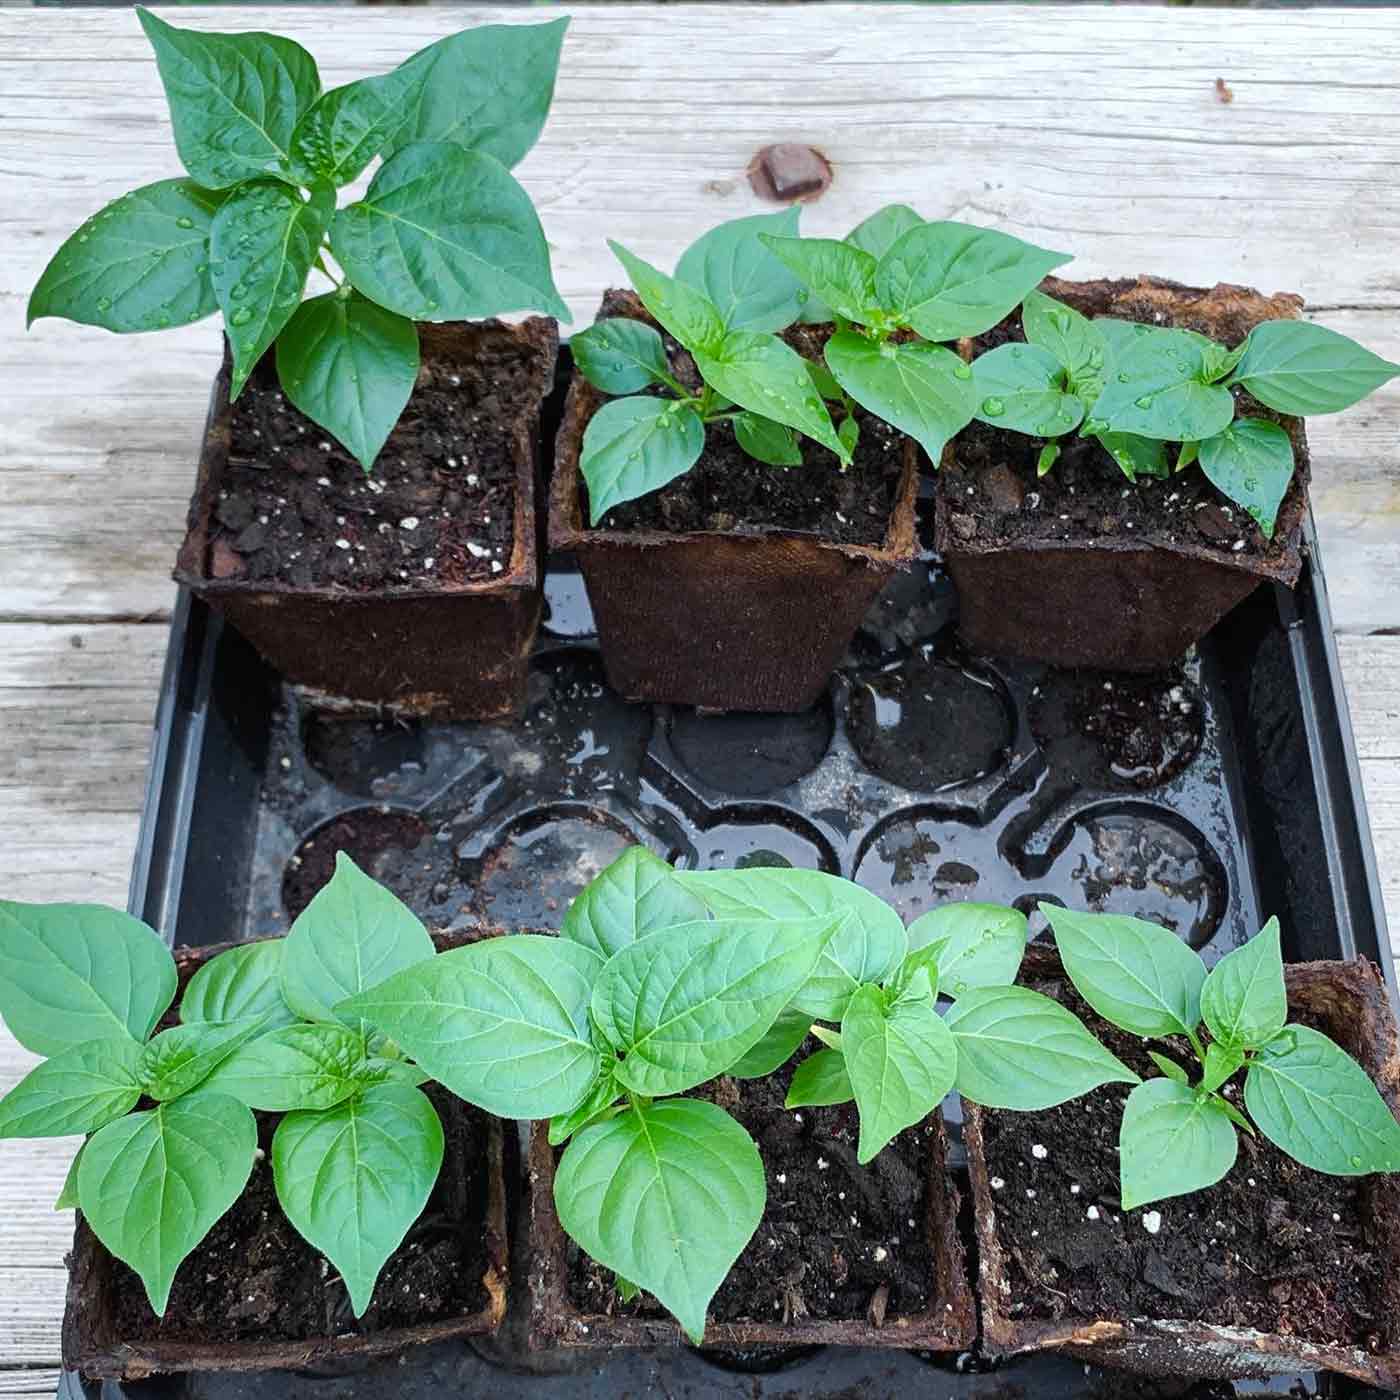 Tray of biquinho pepper seedlings, hardening off outdoors.